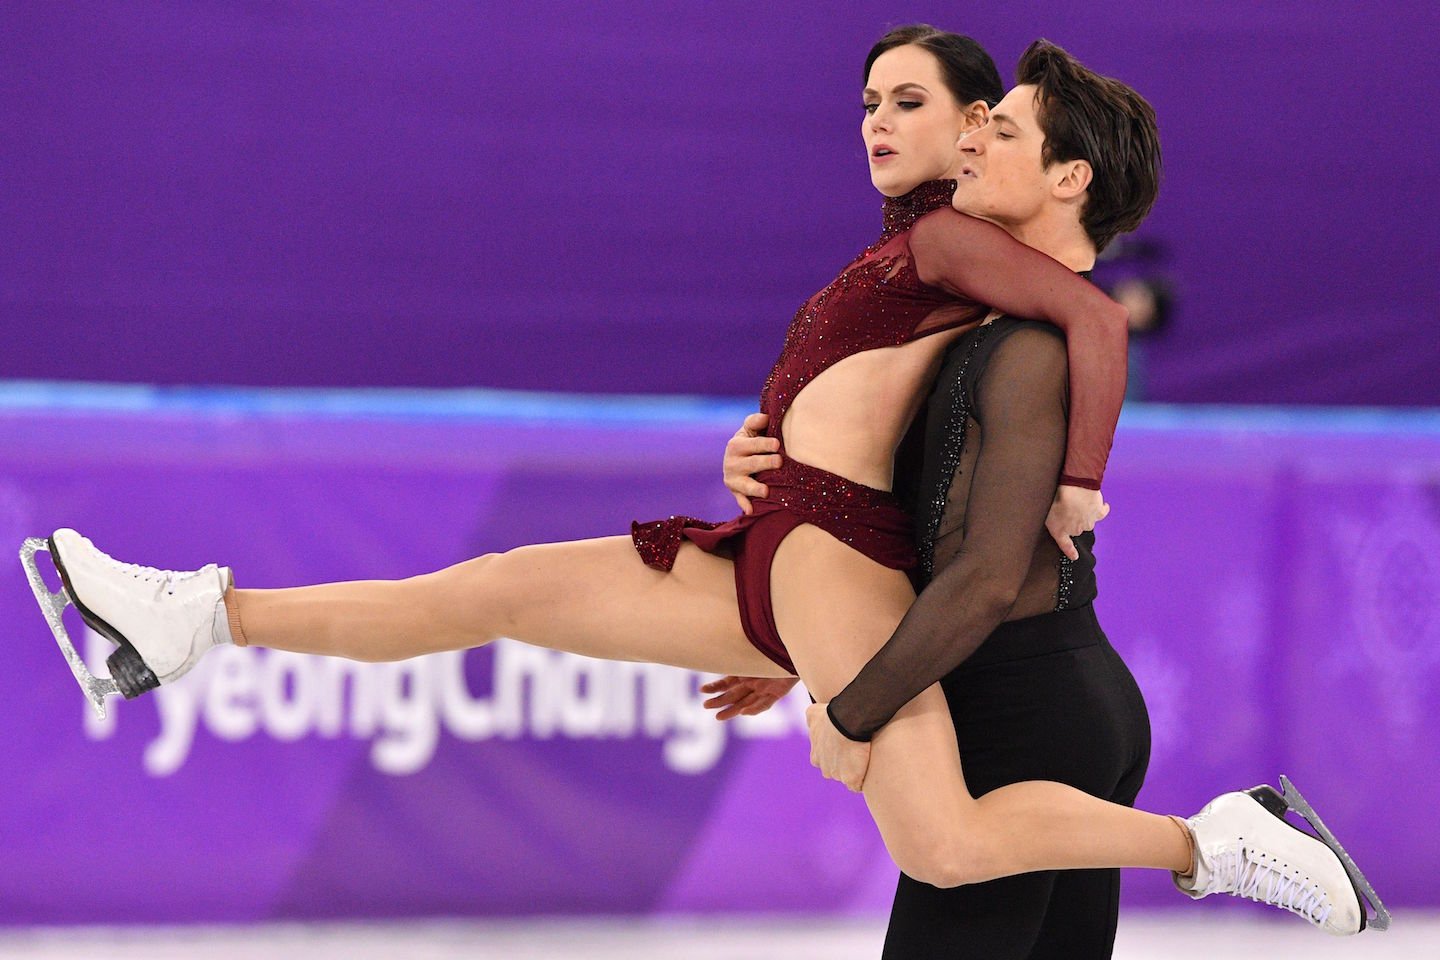 Tessa and scott olympics 2018 dating